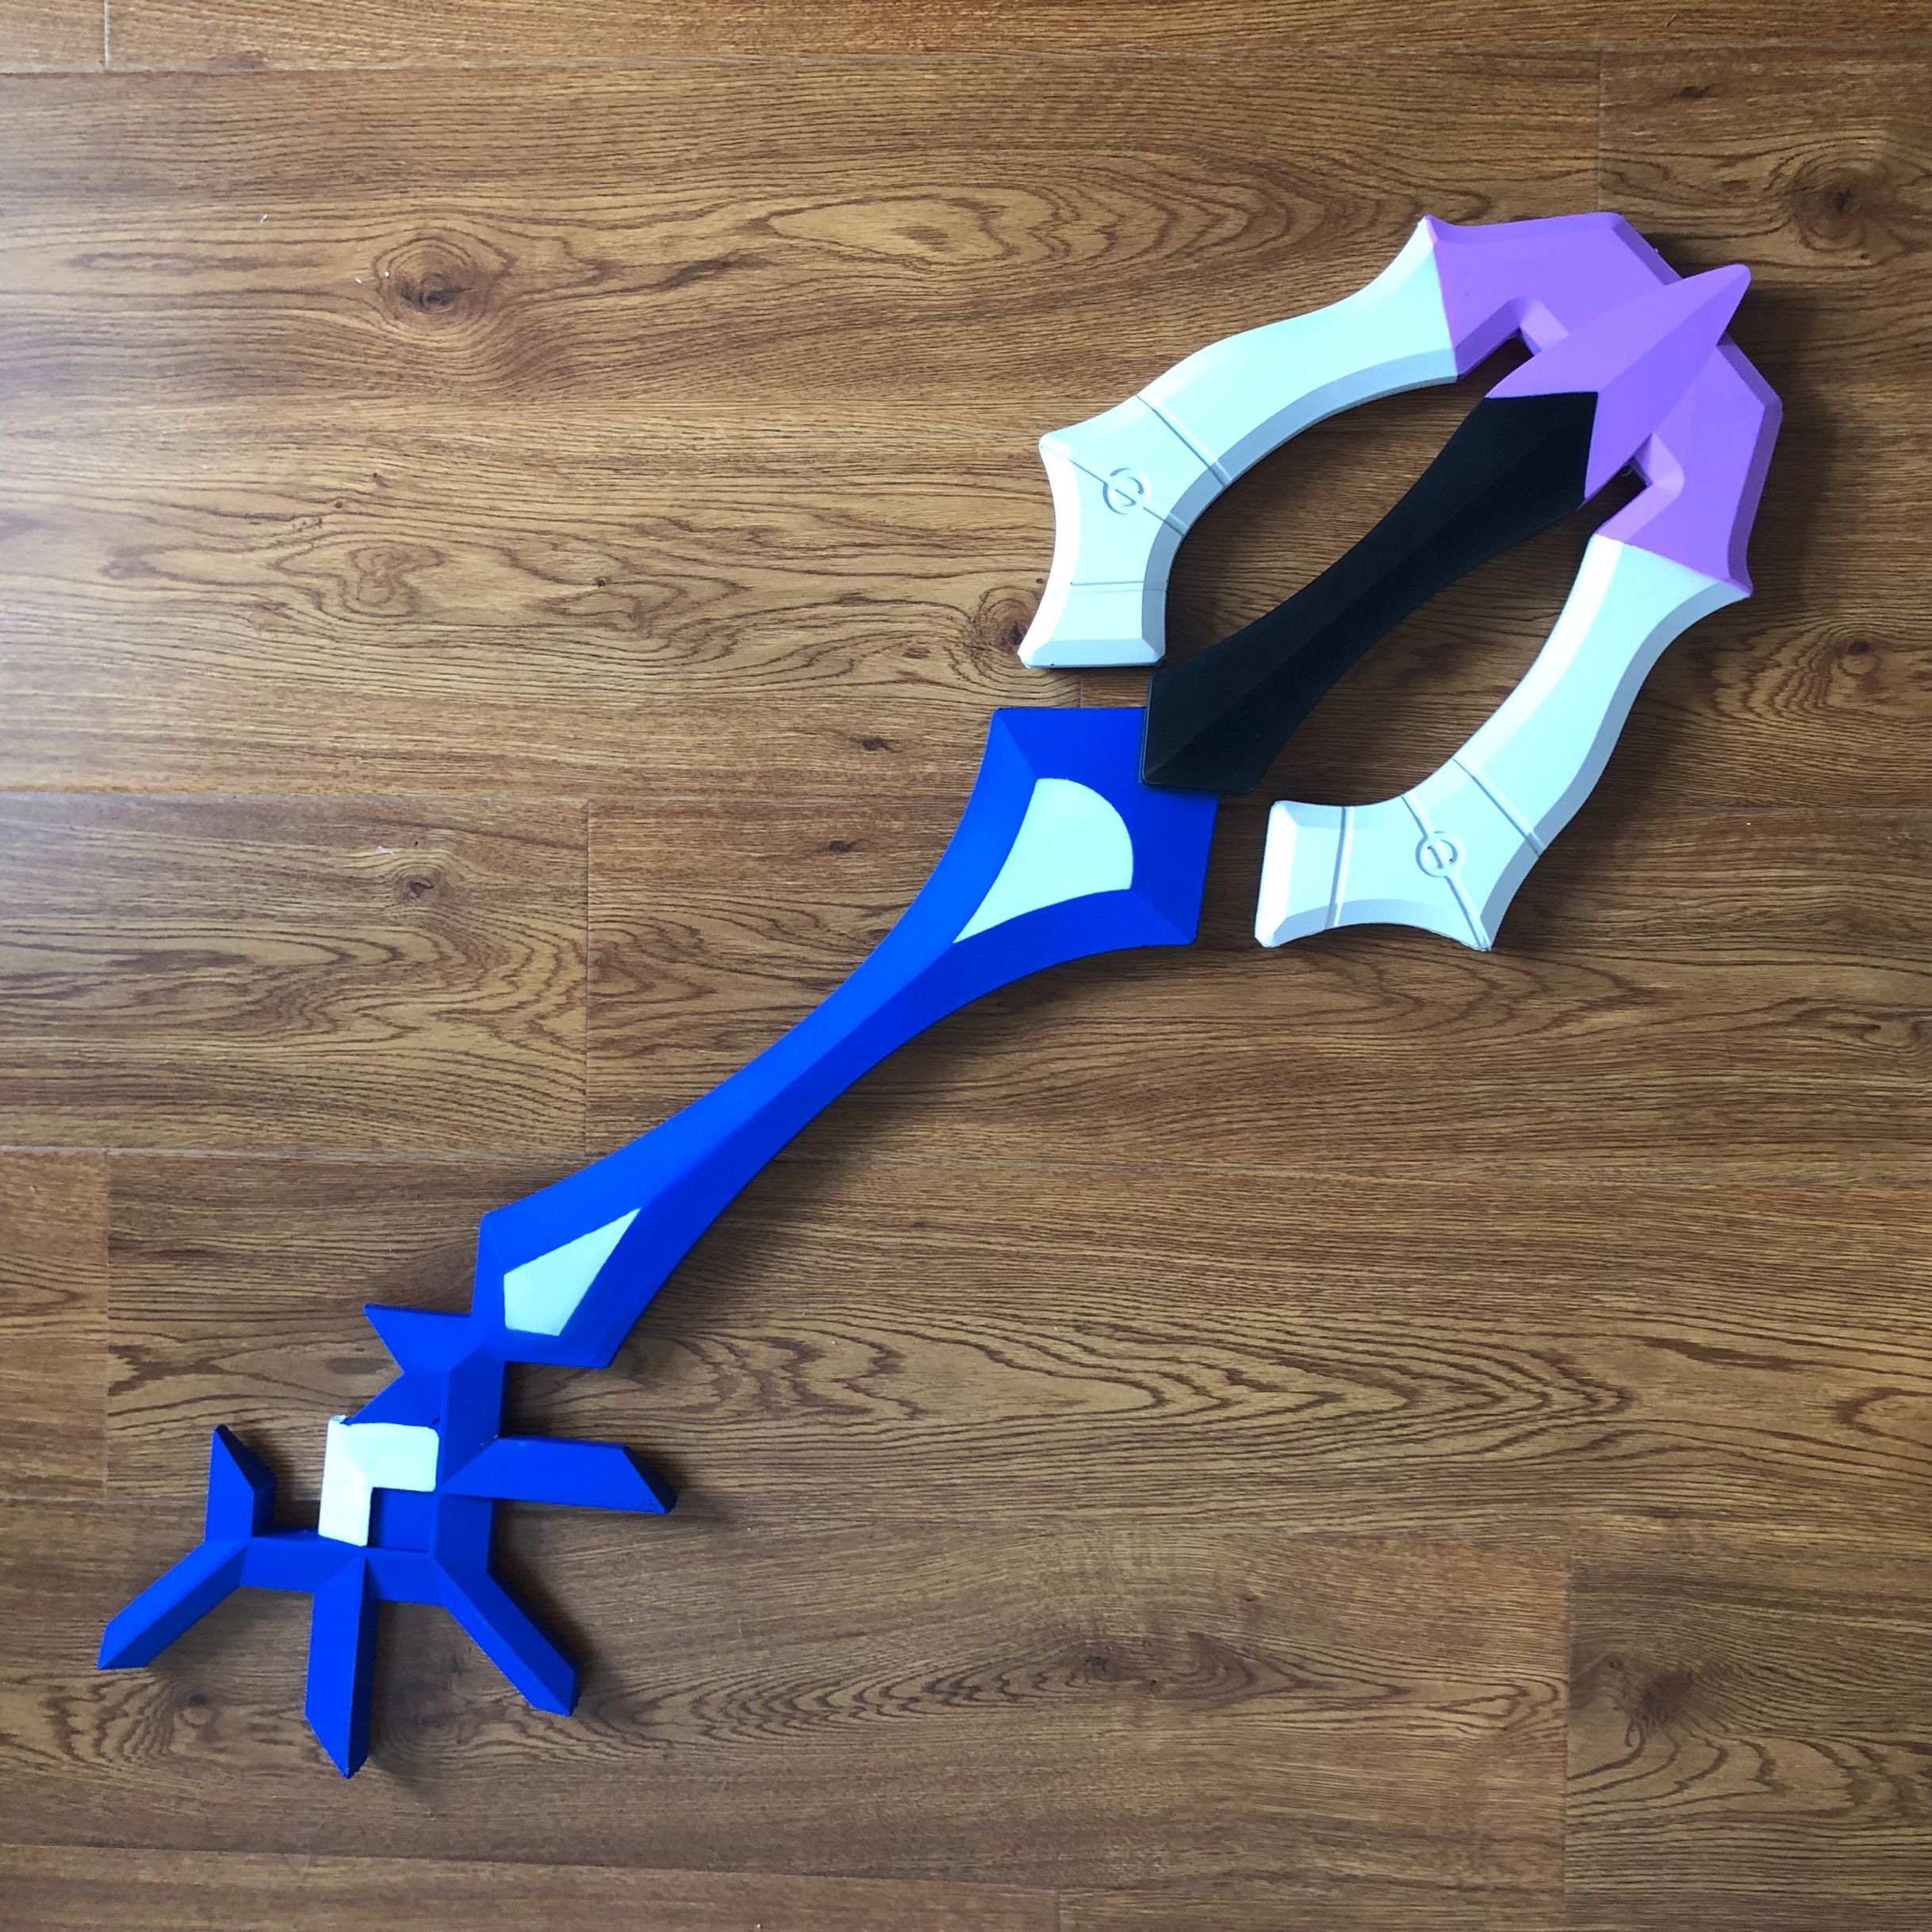 Kingdom Hearts key toy sword cosplay weapon PropChildren's gift